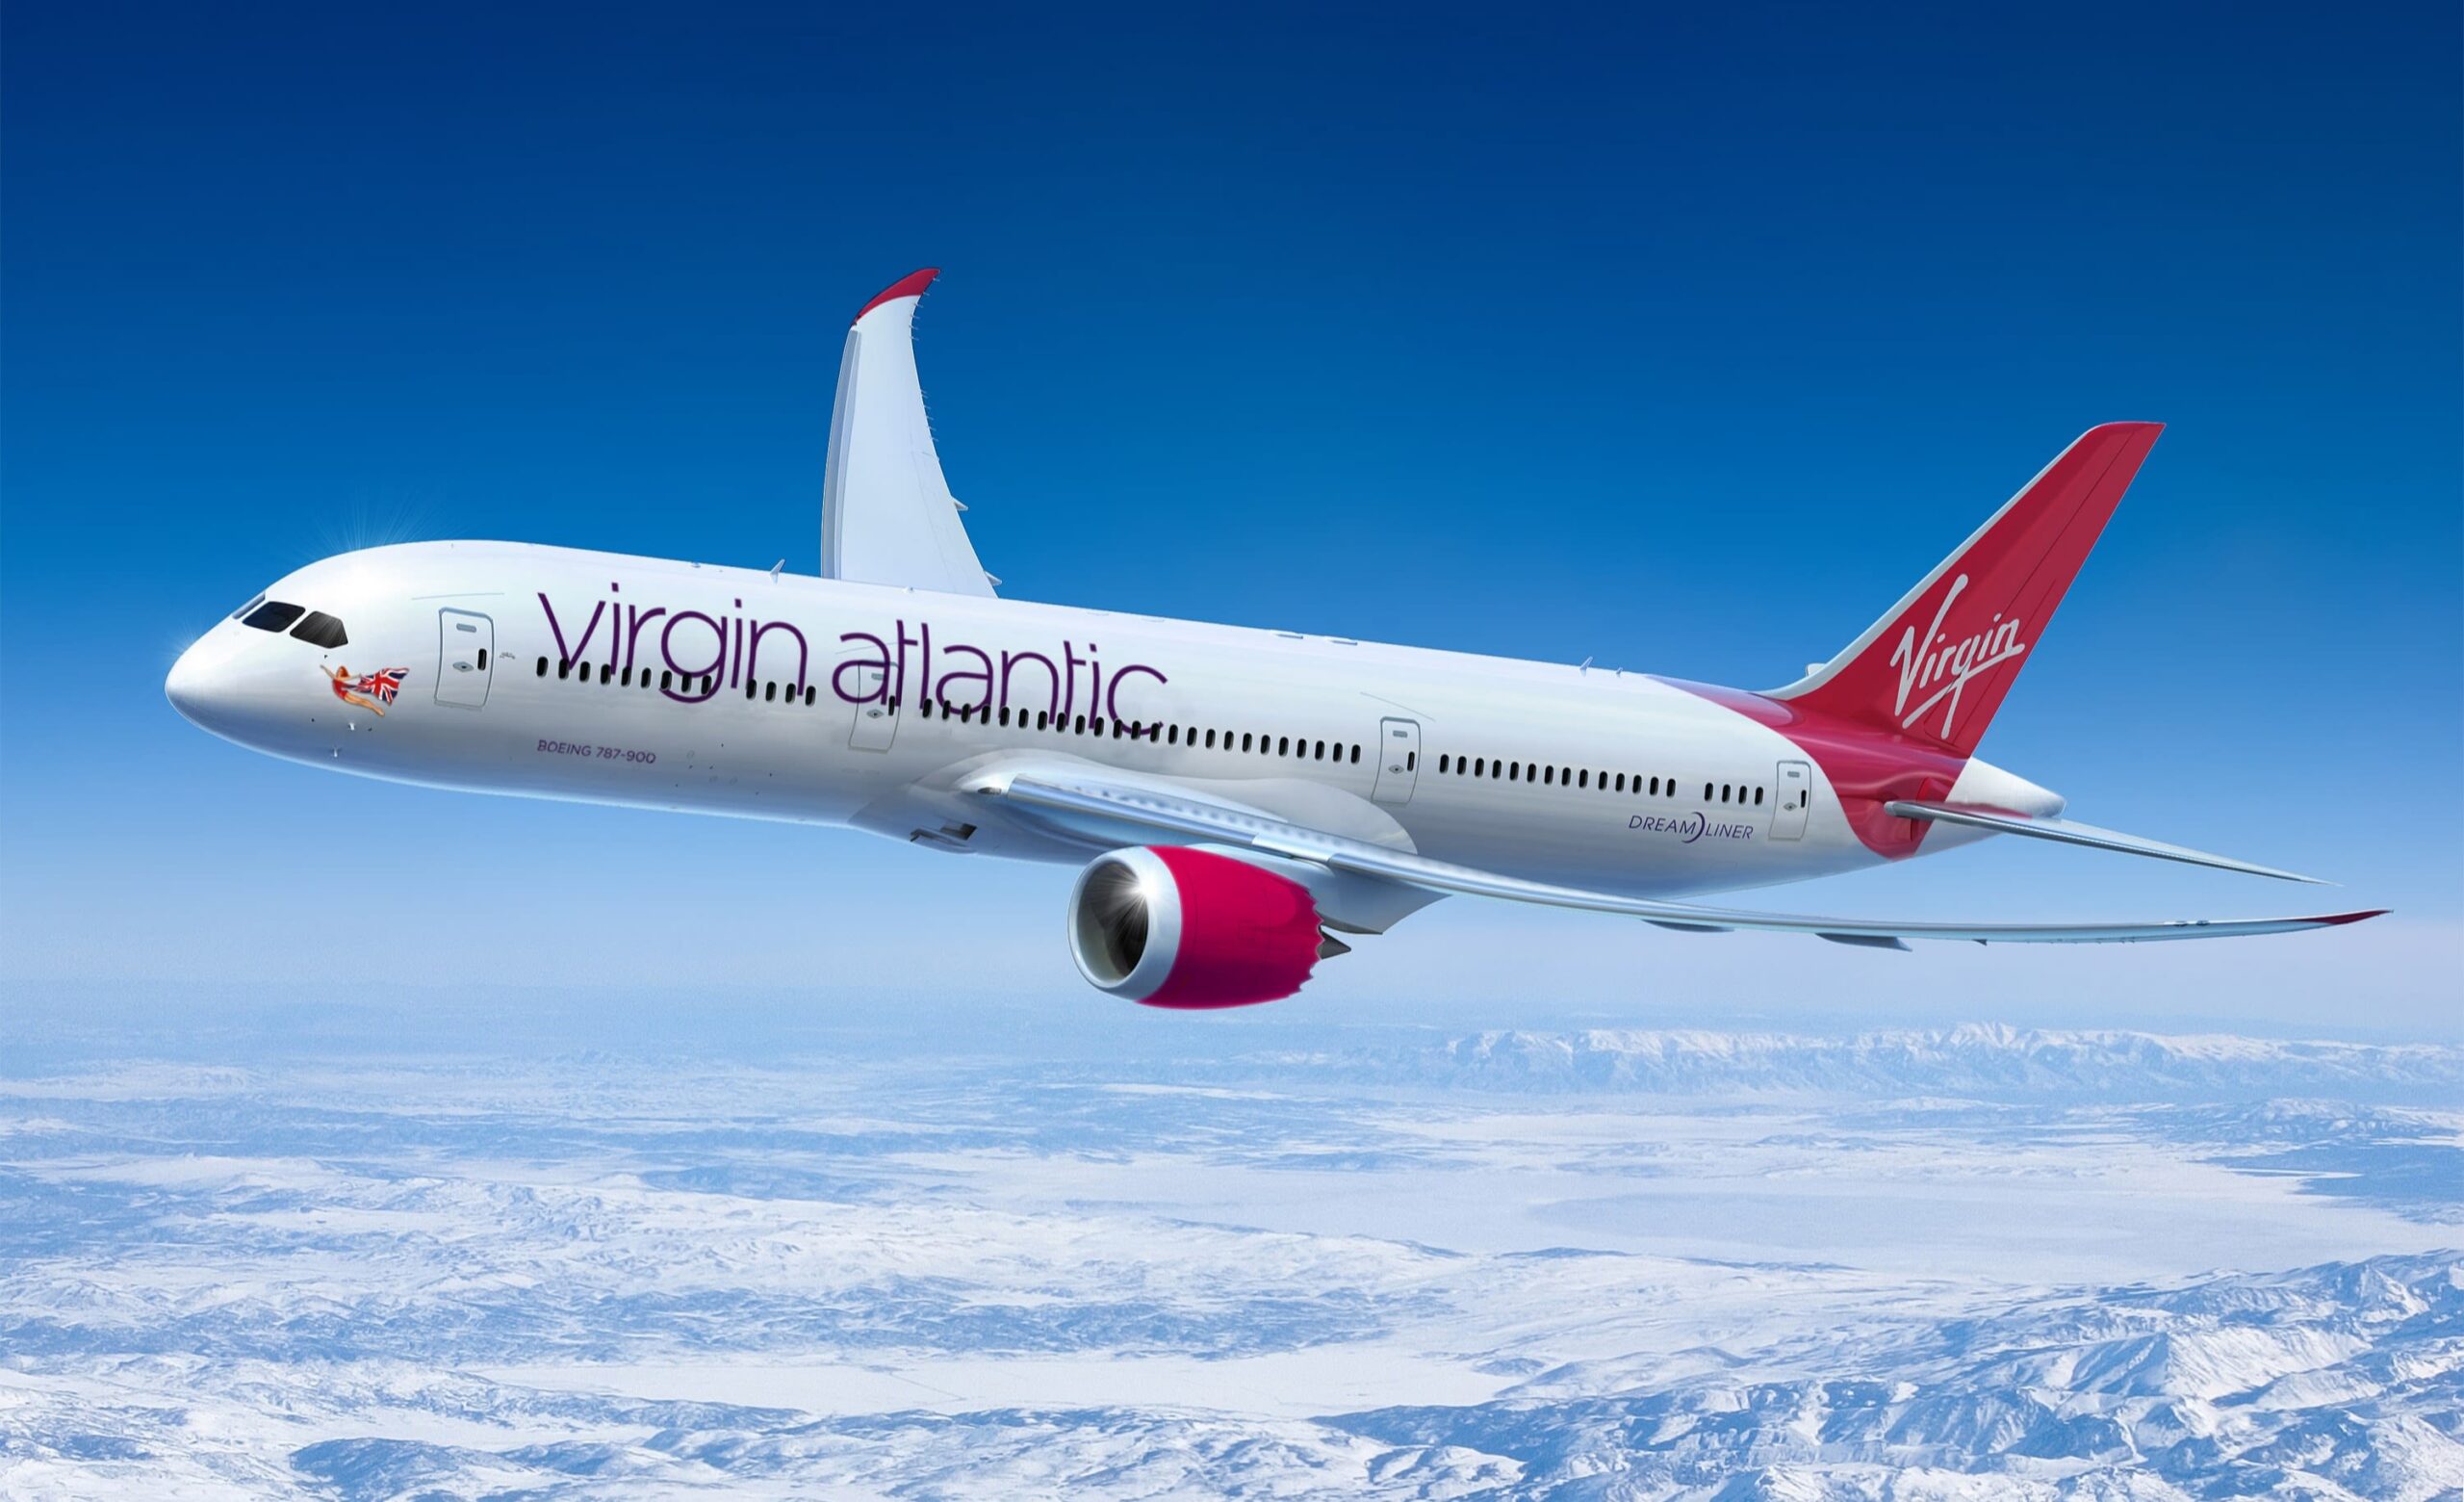 Image credit: Virgin Atlantic. Virgin Atlantic Boeing 787 jet KellyOnTech